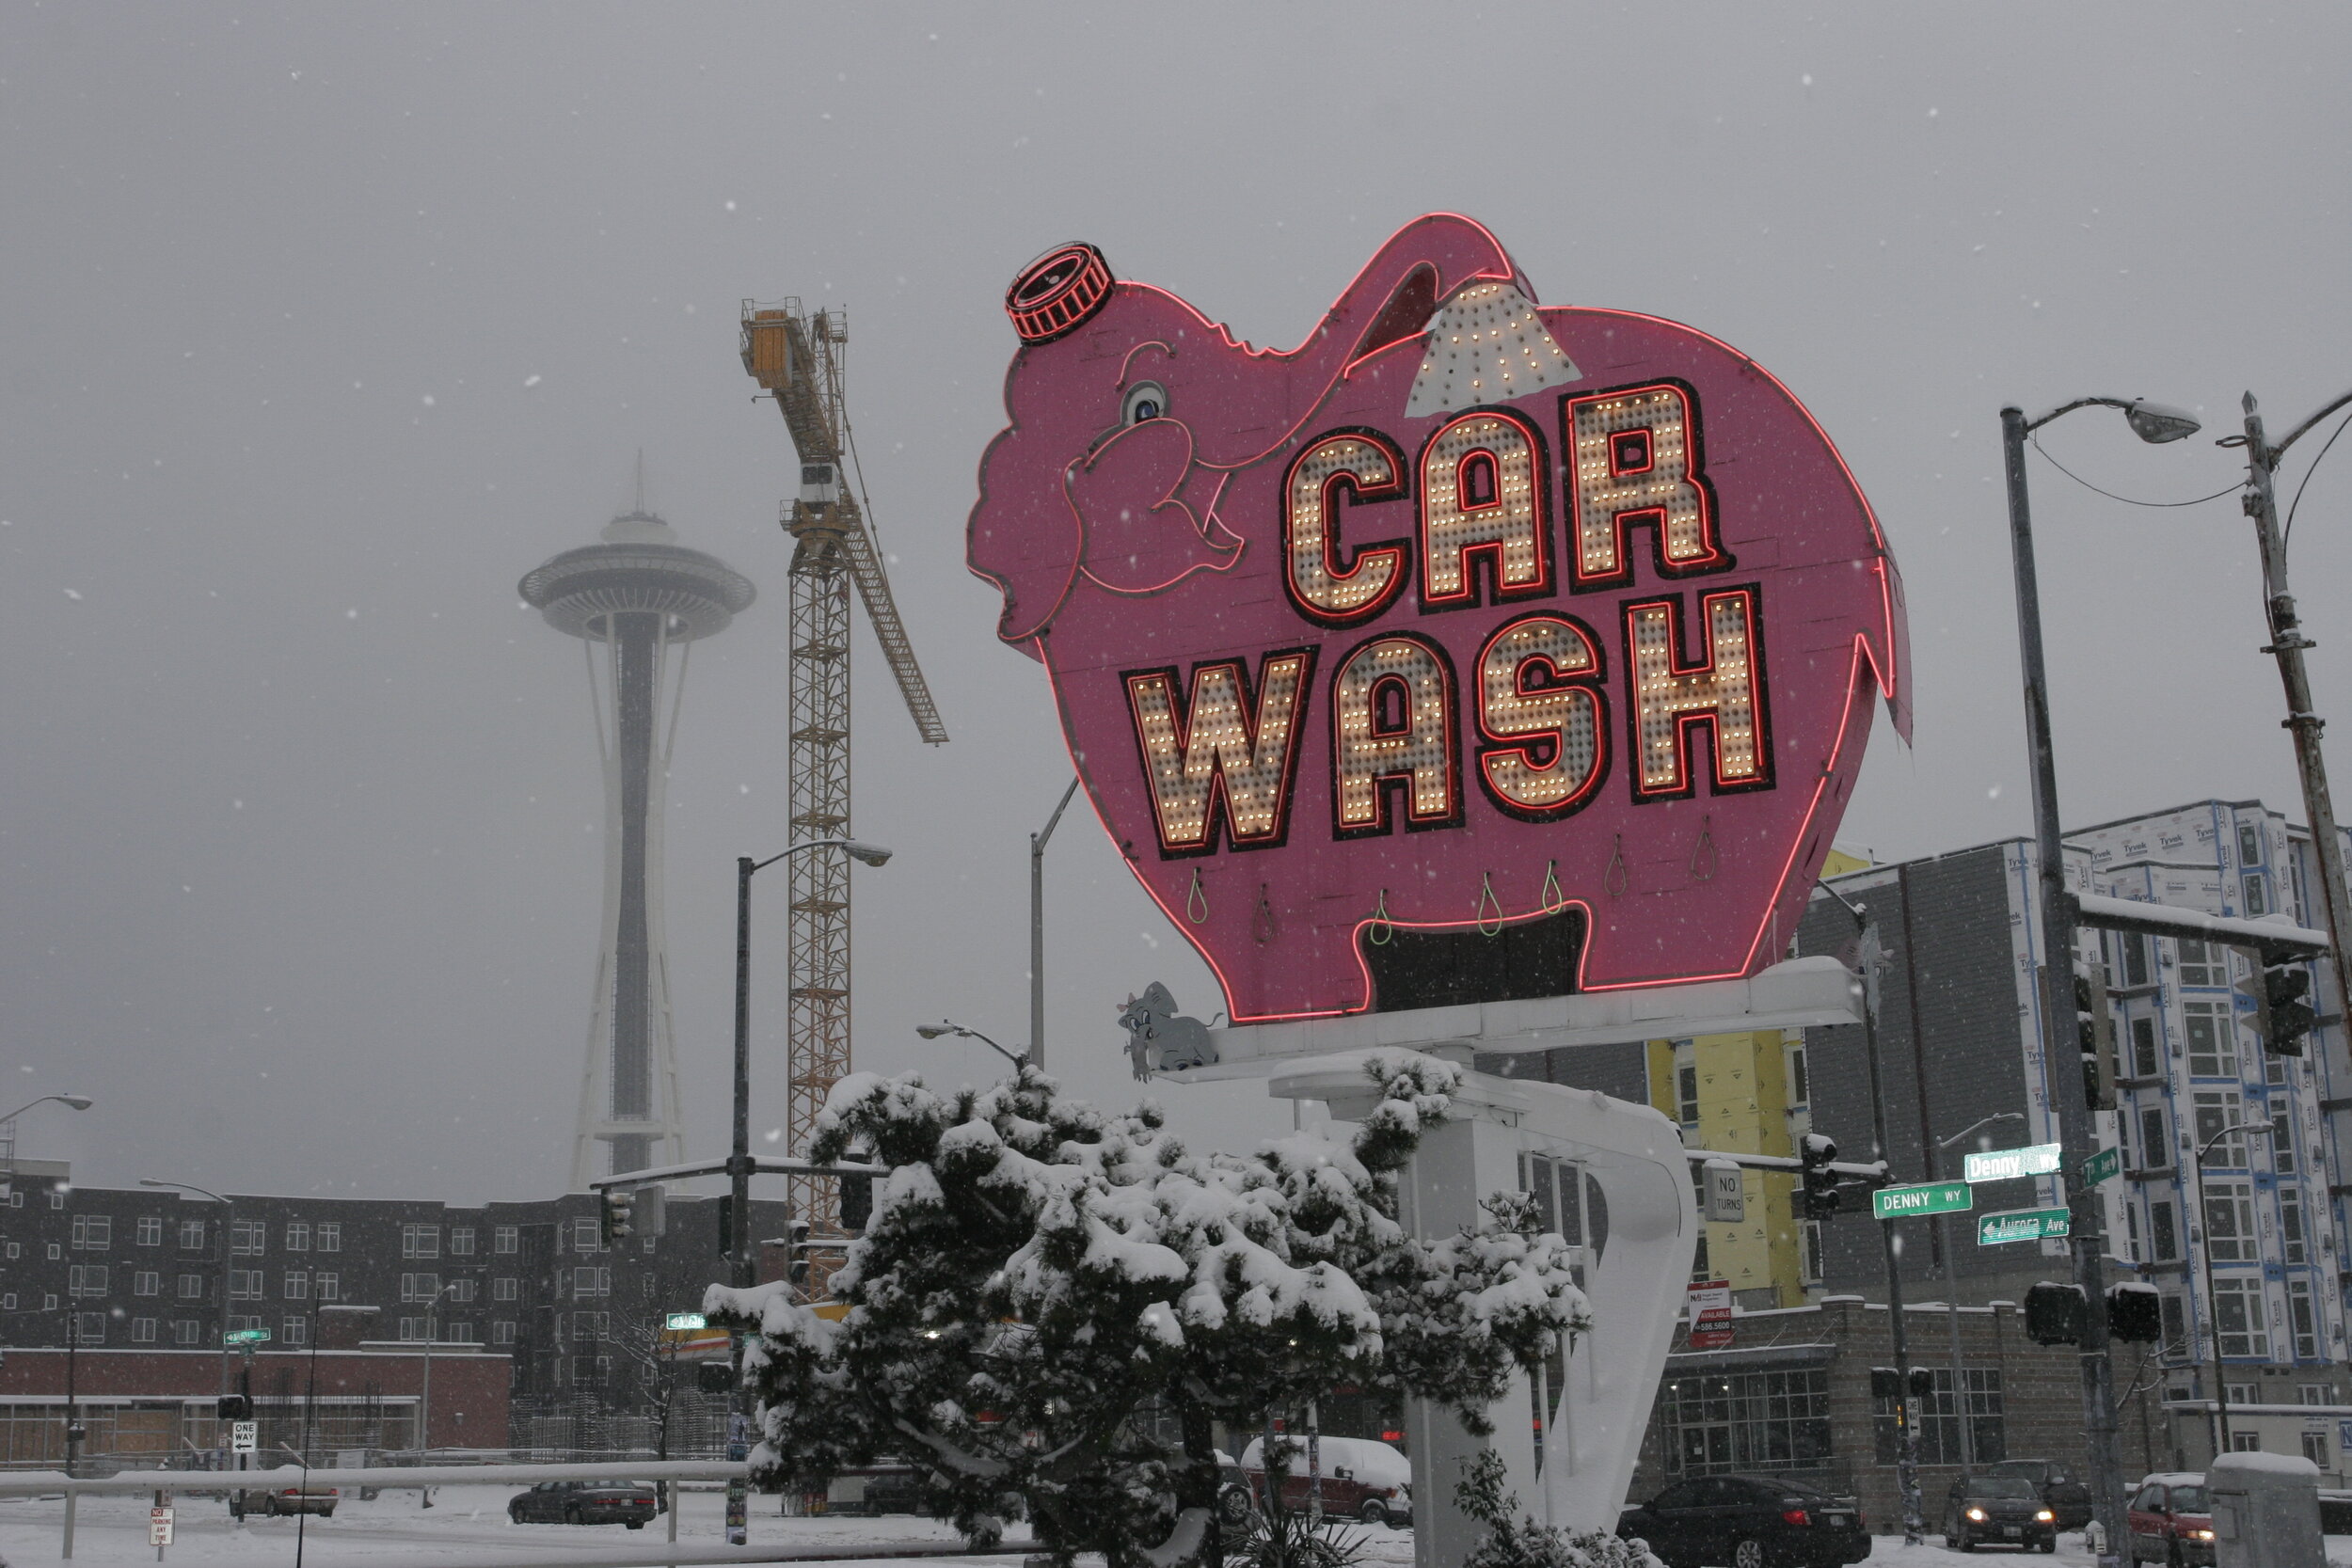 The Pink Elephant Car Wash - Winter Storm 2008 - Seattle, WA